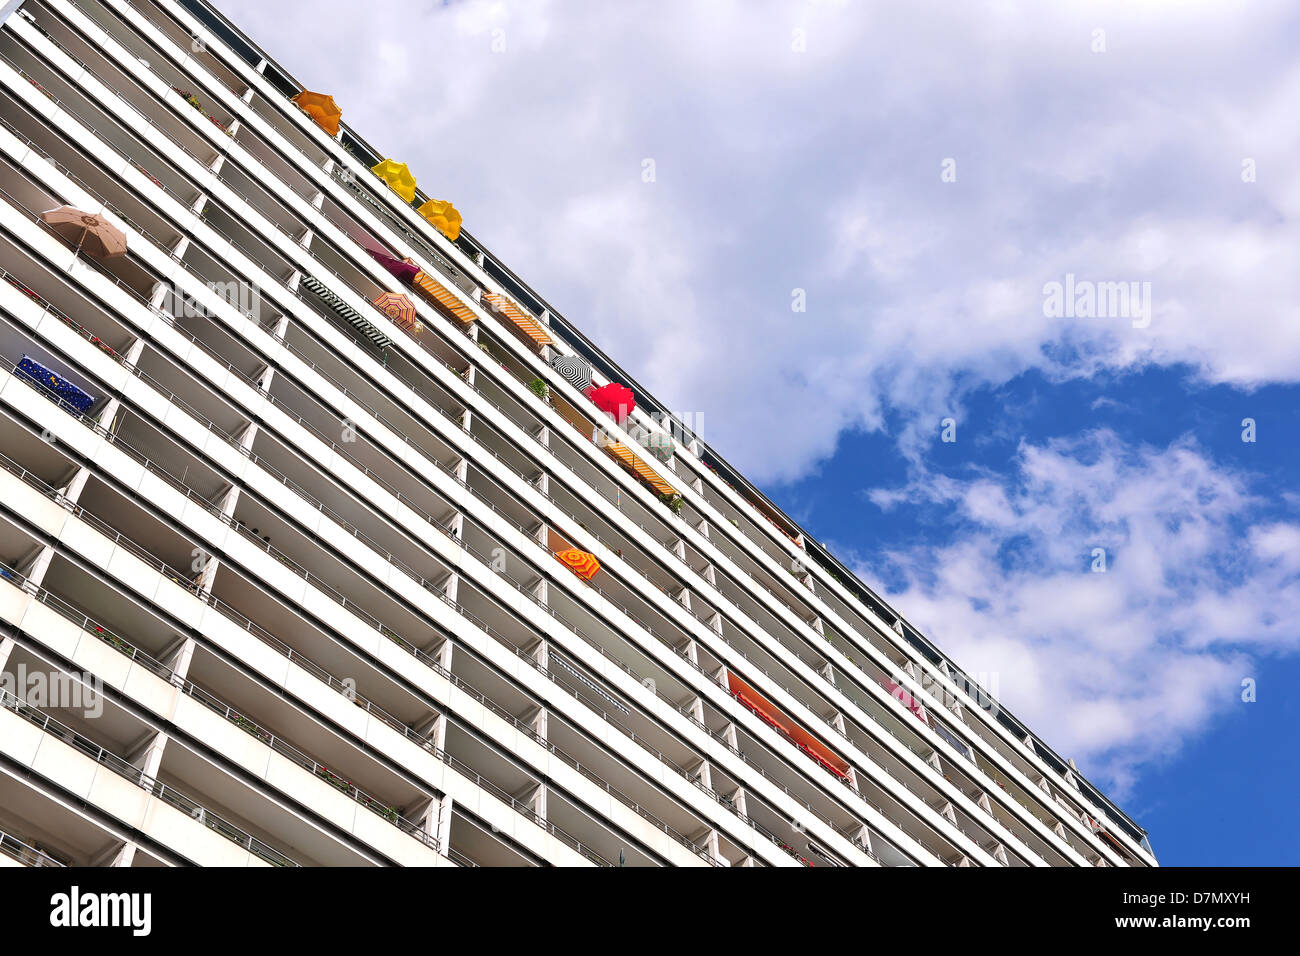 Summer in the City - house facade with umbrellas, Berlin Stock Photo